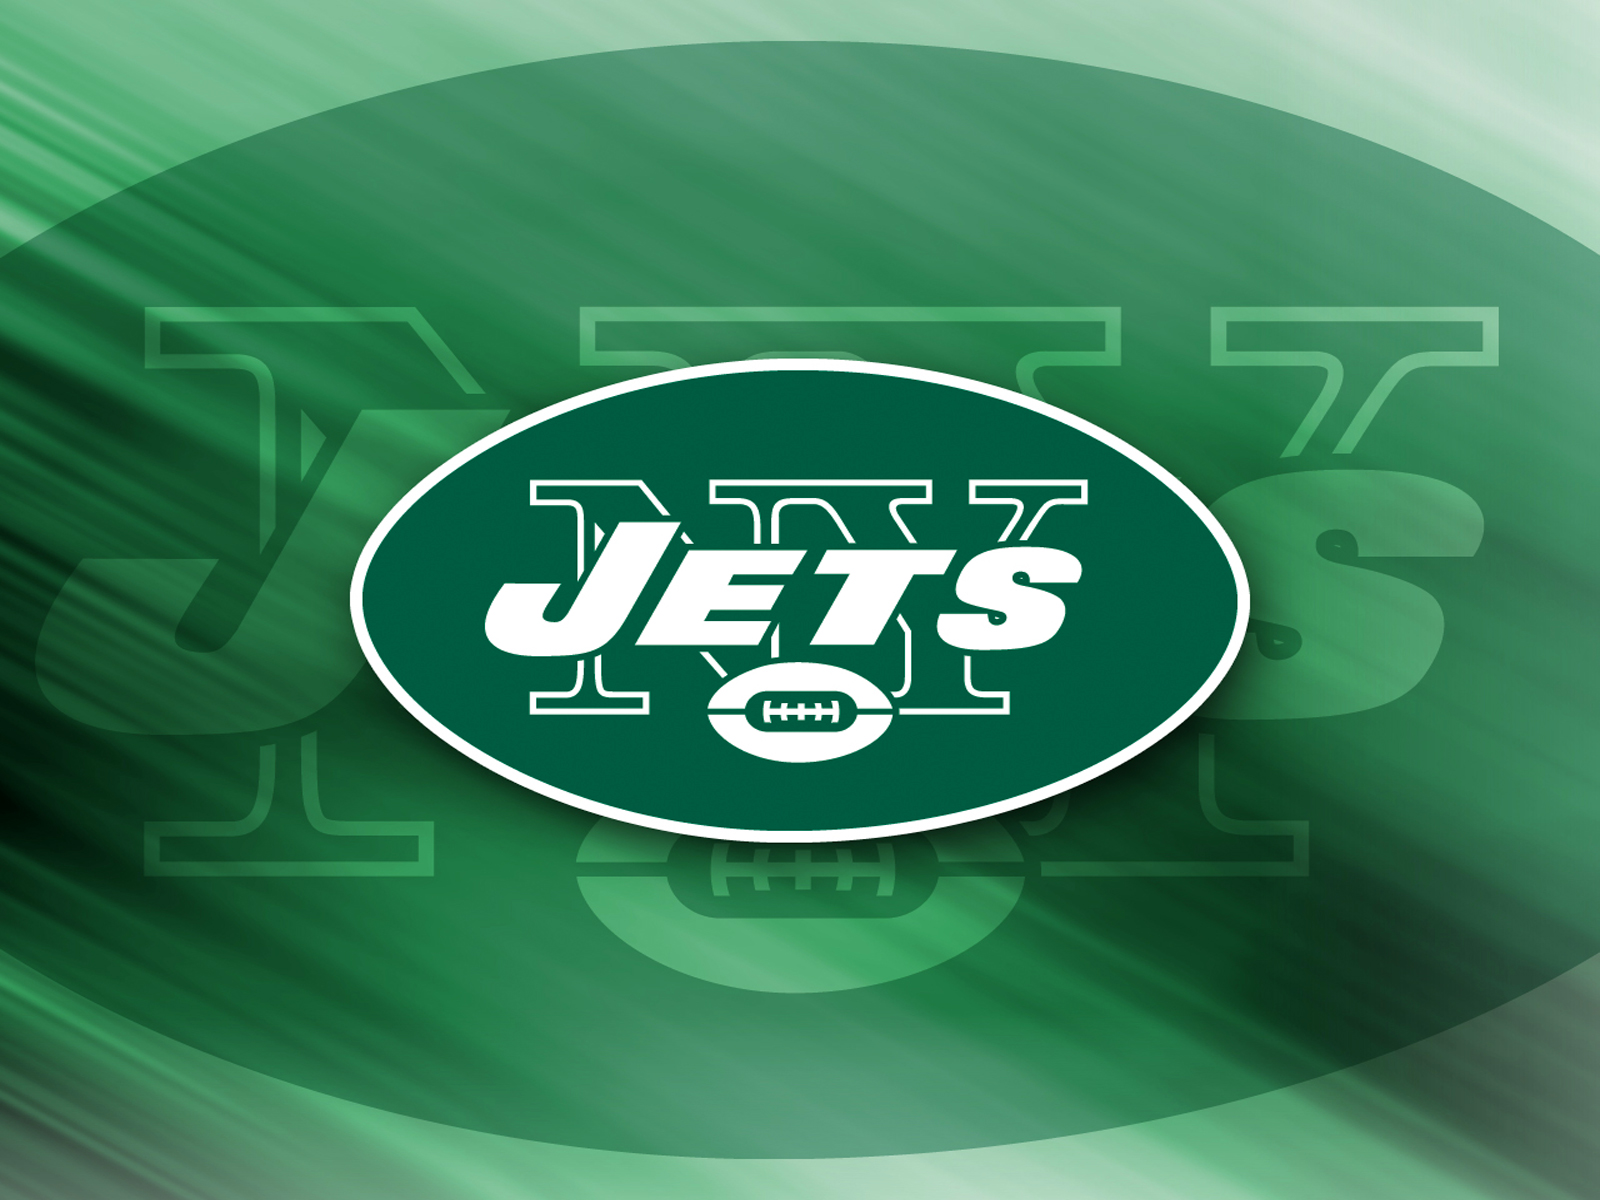 New York Jets Puter Desktop Wallpaper Pictures Image